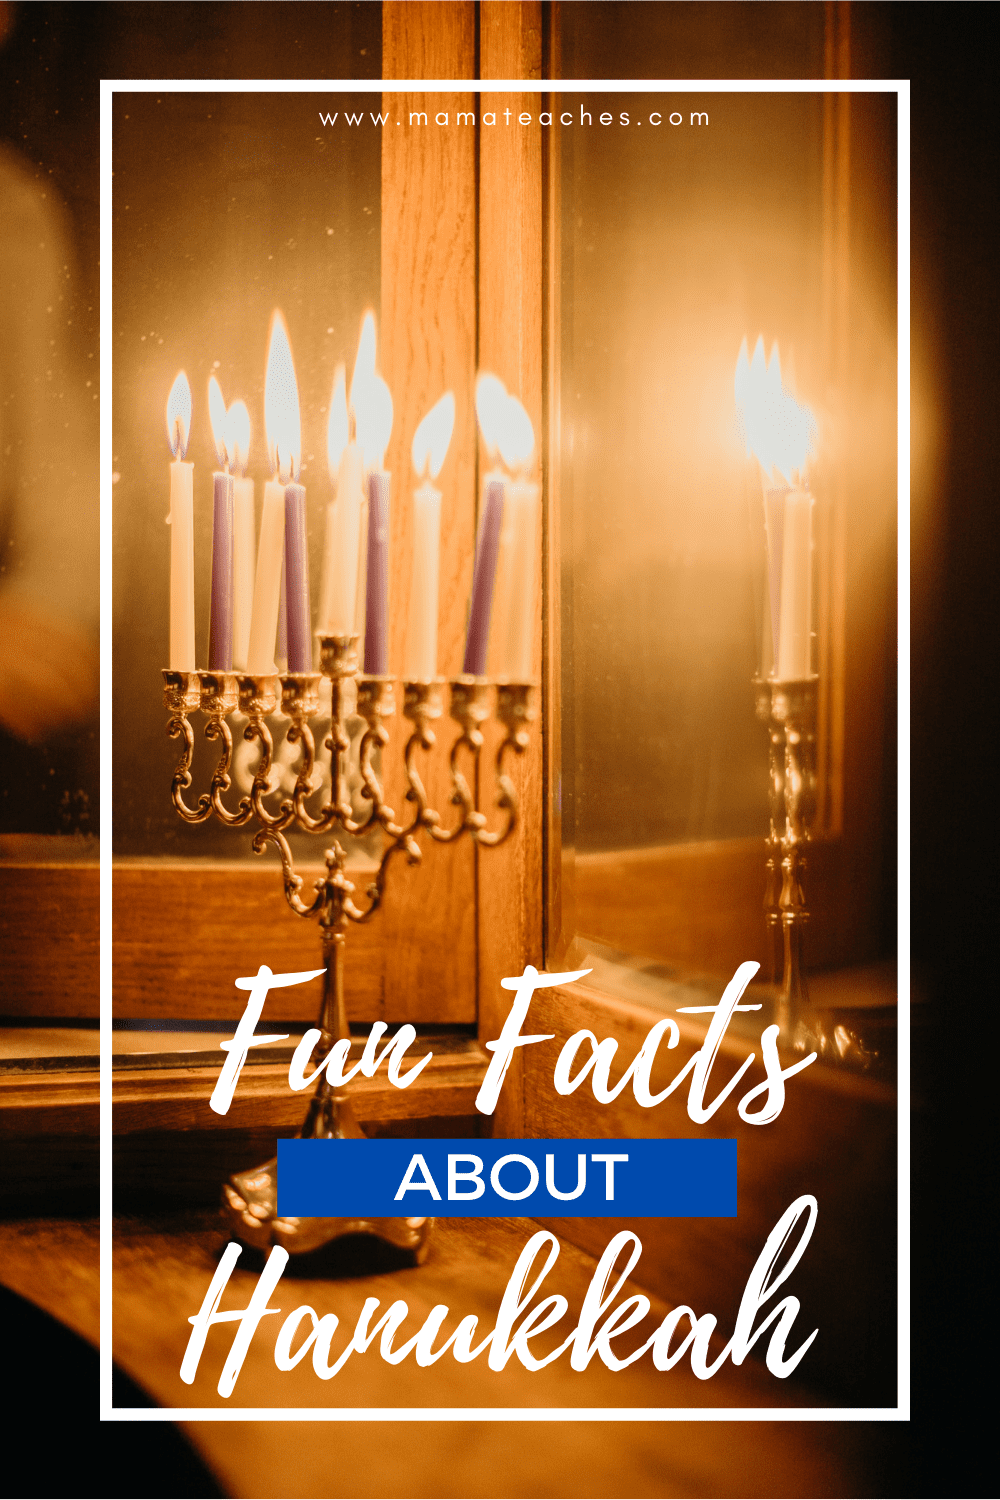 Fun Facts About Hanukkah